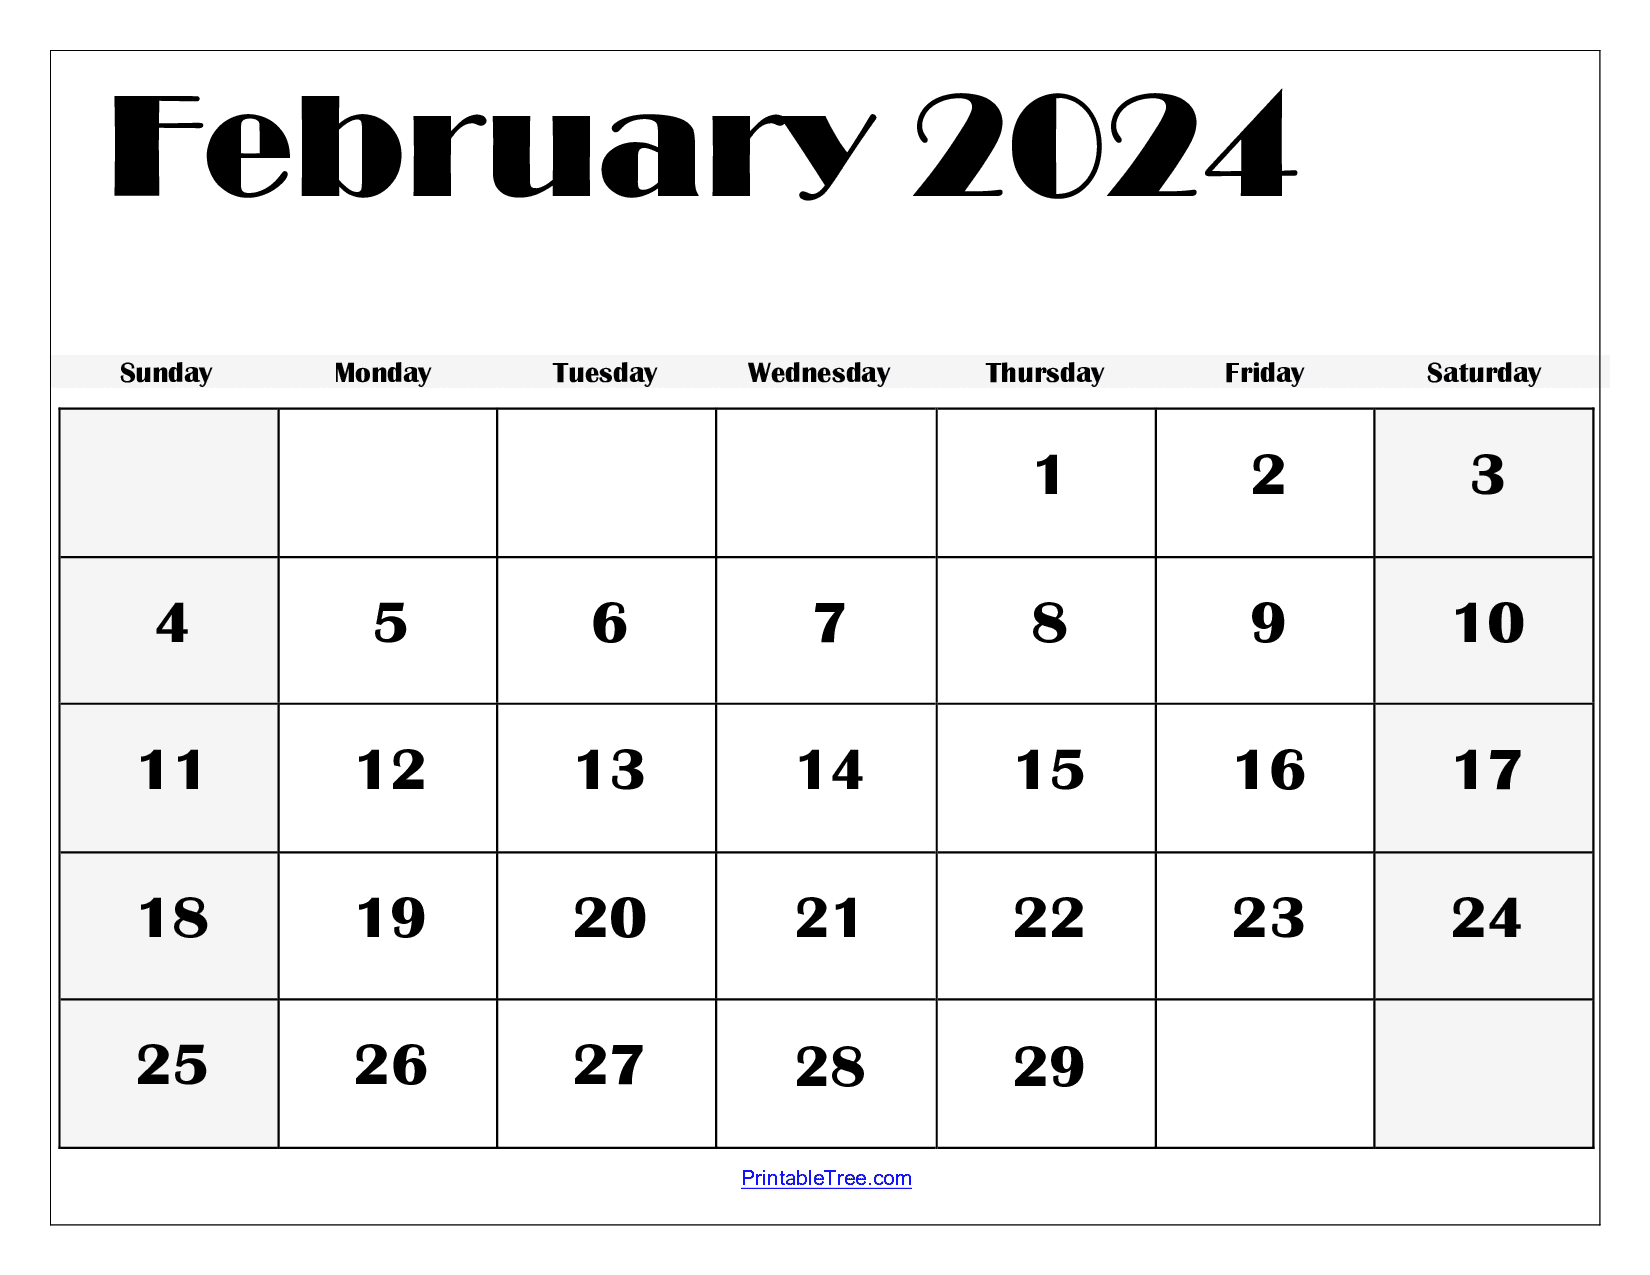 February 2024 Calendar Printable Pdf Template With Holidays for Blank Printable Calendar February 2024